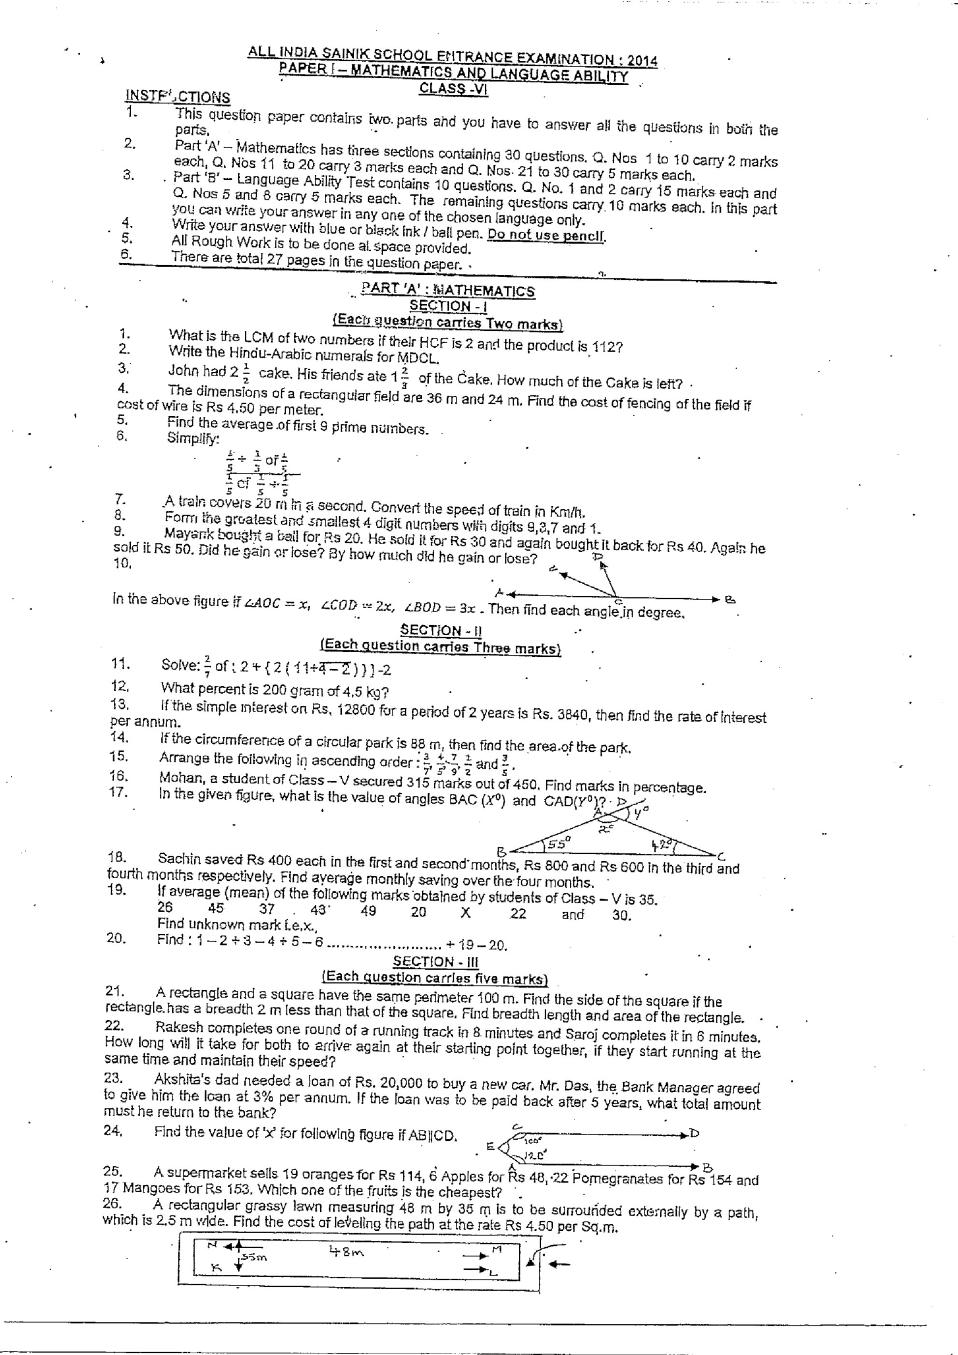 AISSEE 2014 Question Paper for Class 6 | Sainik School Entrance Exam (Paper 1) - Page 1